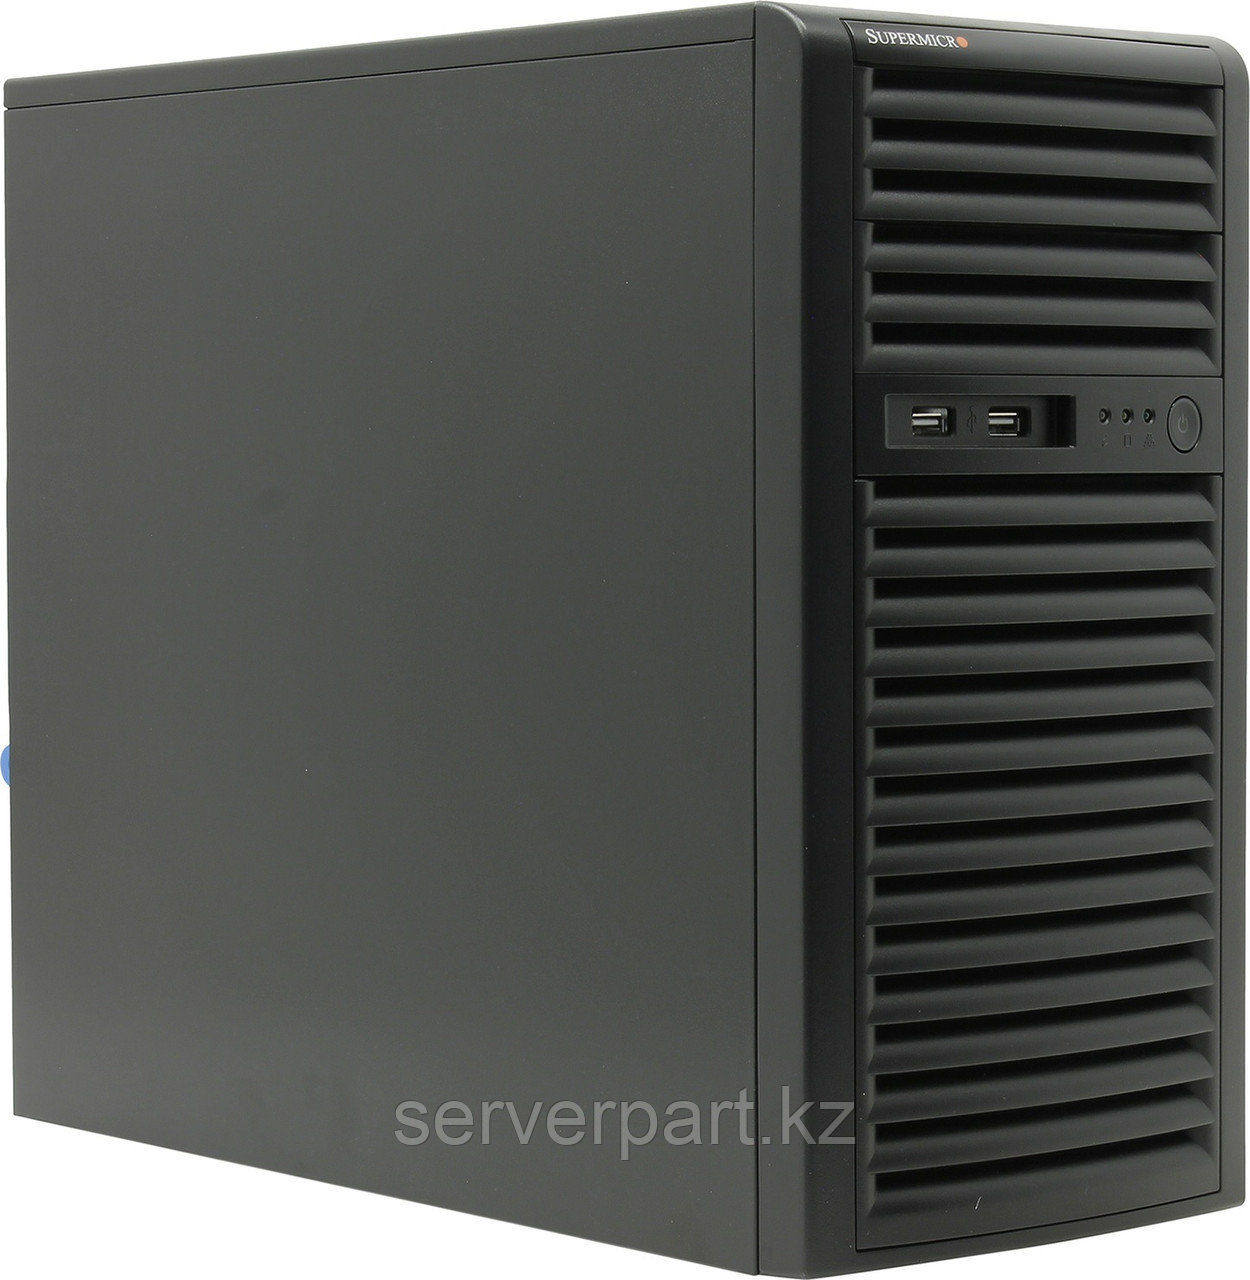 Сервер Supermicro 732-500B\X10DRL-F Tower 4LFF/1х8-core Intel Xeon E5-2667v3 3.2GHz/no RAM/no HDD